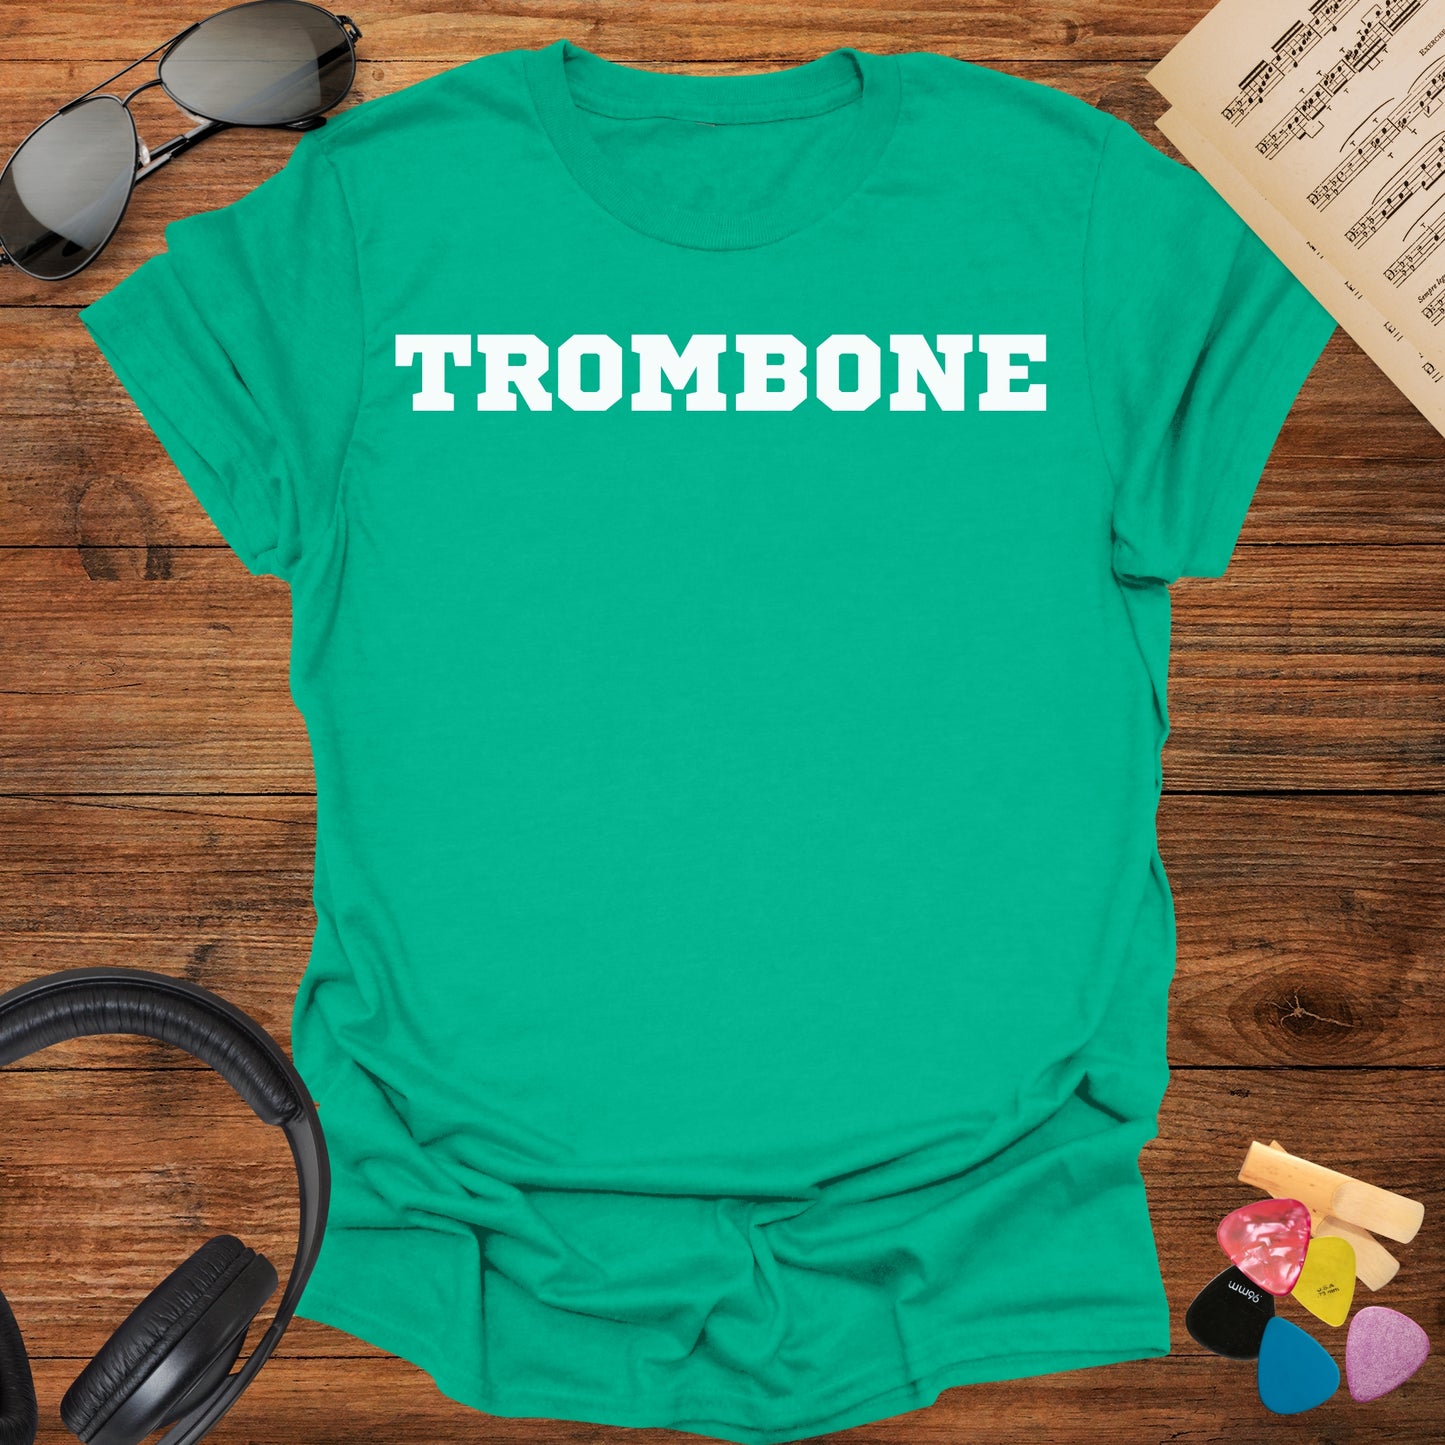 Trombone Tshirt